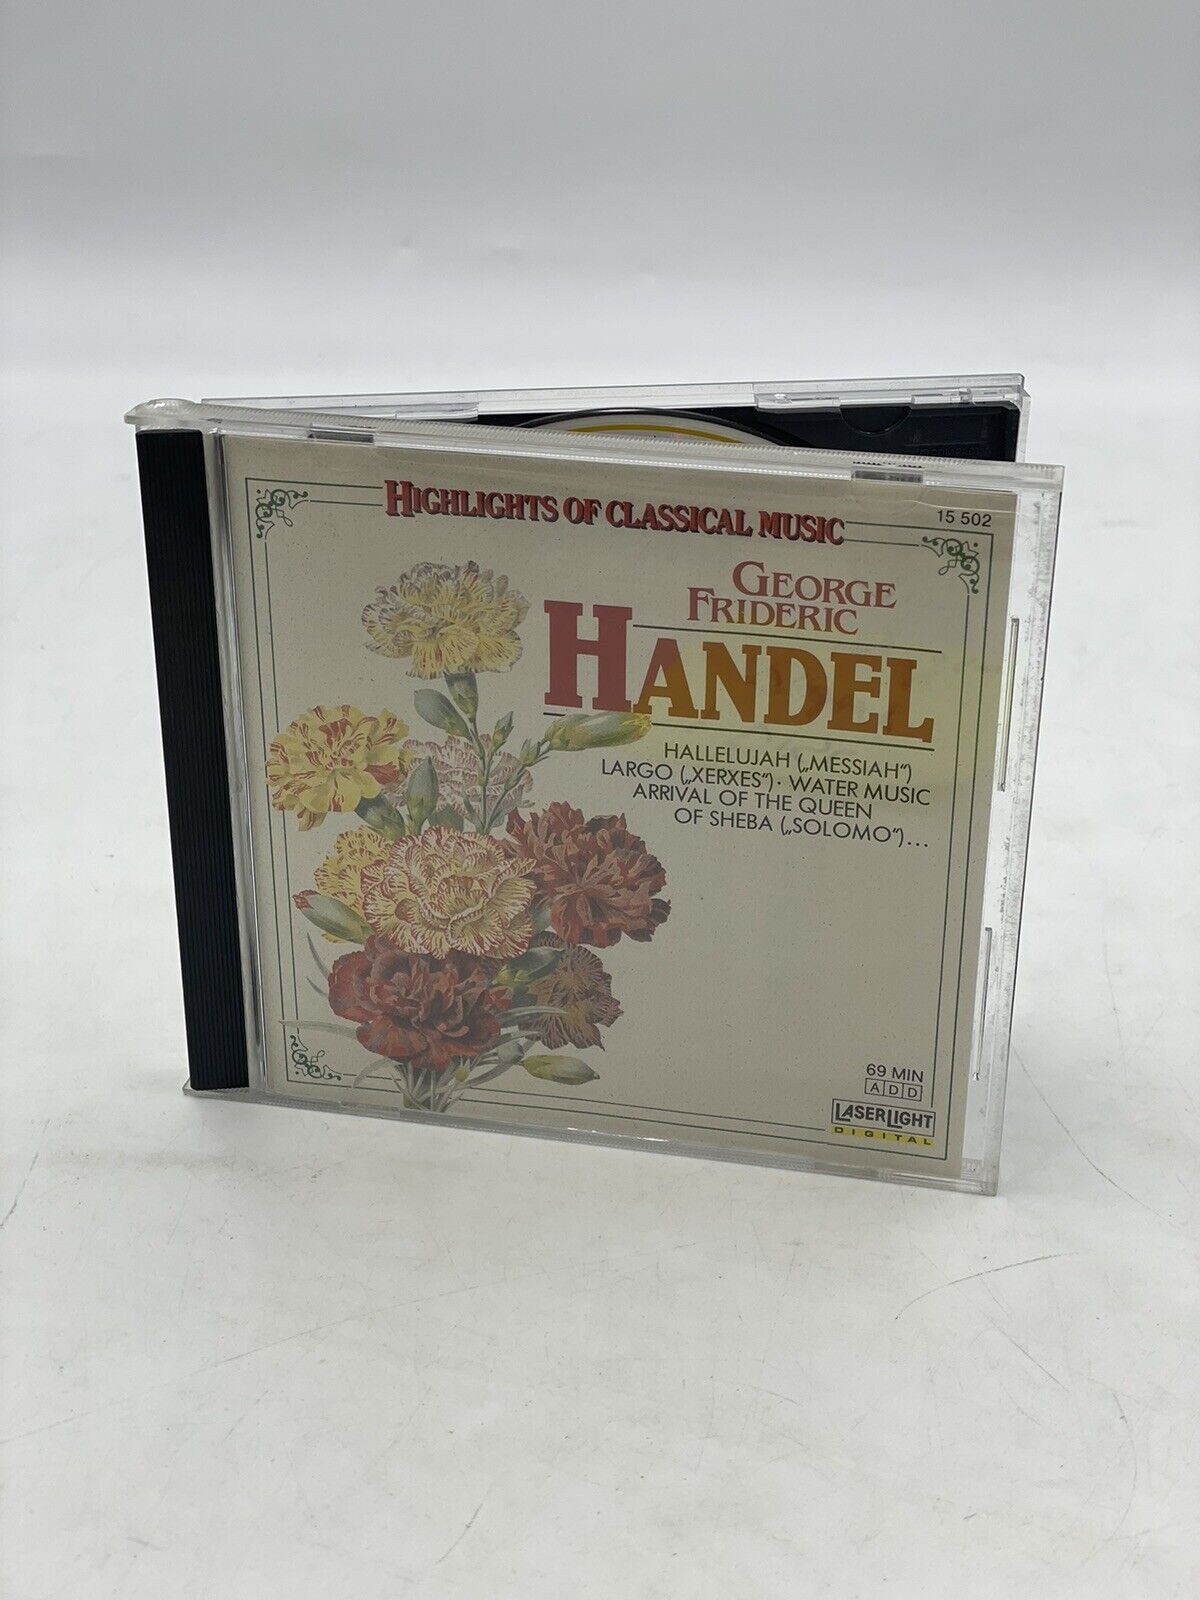 George Frideric Handel (Music Album CD, 1988) Highlights Of Classical Music - VG